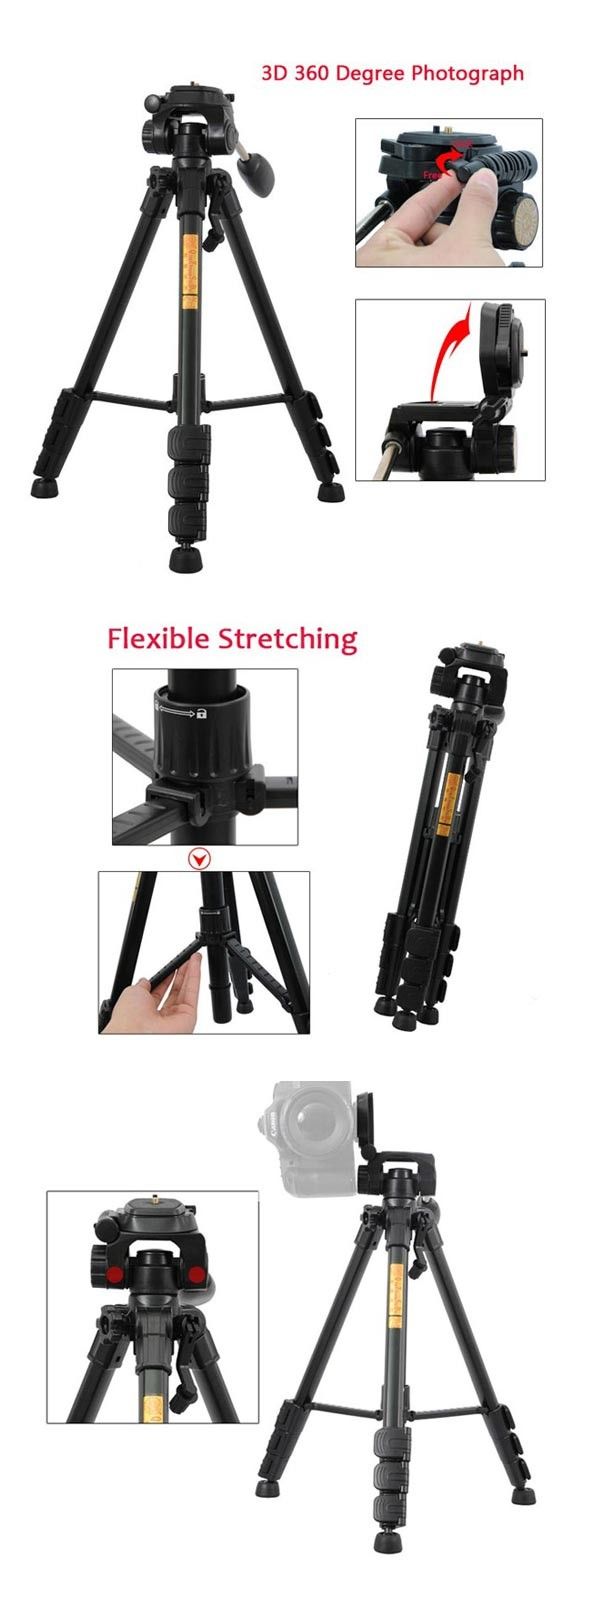 Portable-QZSD-Q111-4-Sections-5KG-Tripod-With-Q08-Rocker-Arm-Ball-Head-For-SLR-Camera-1001454